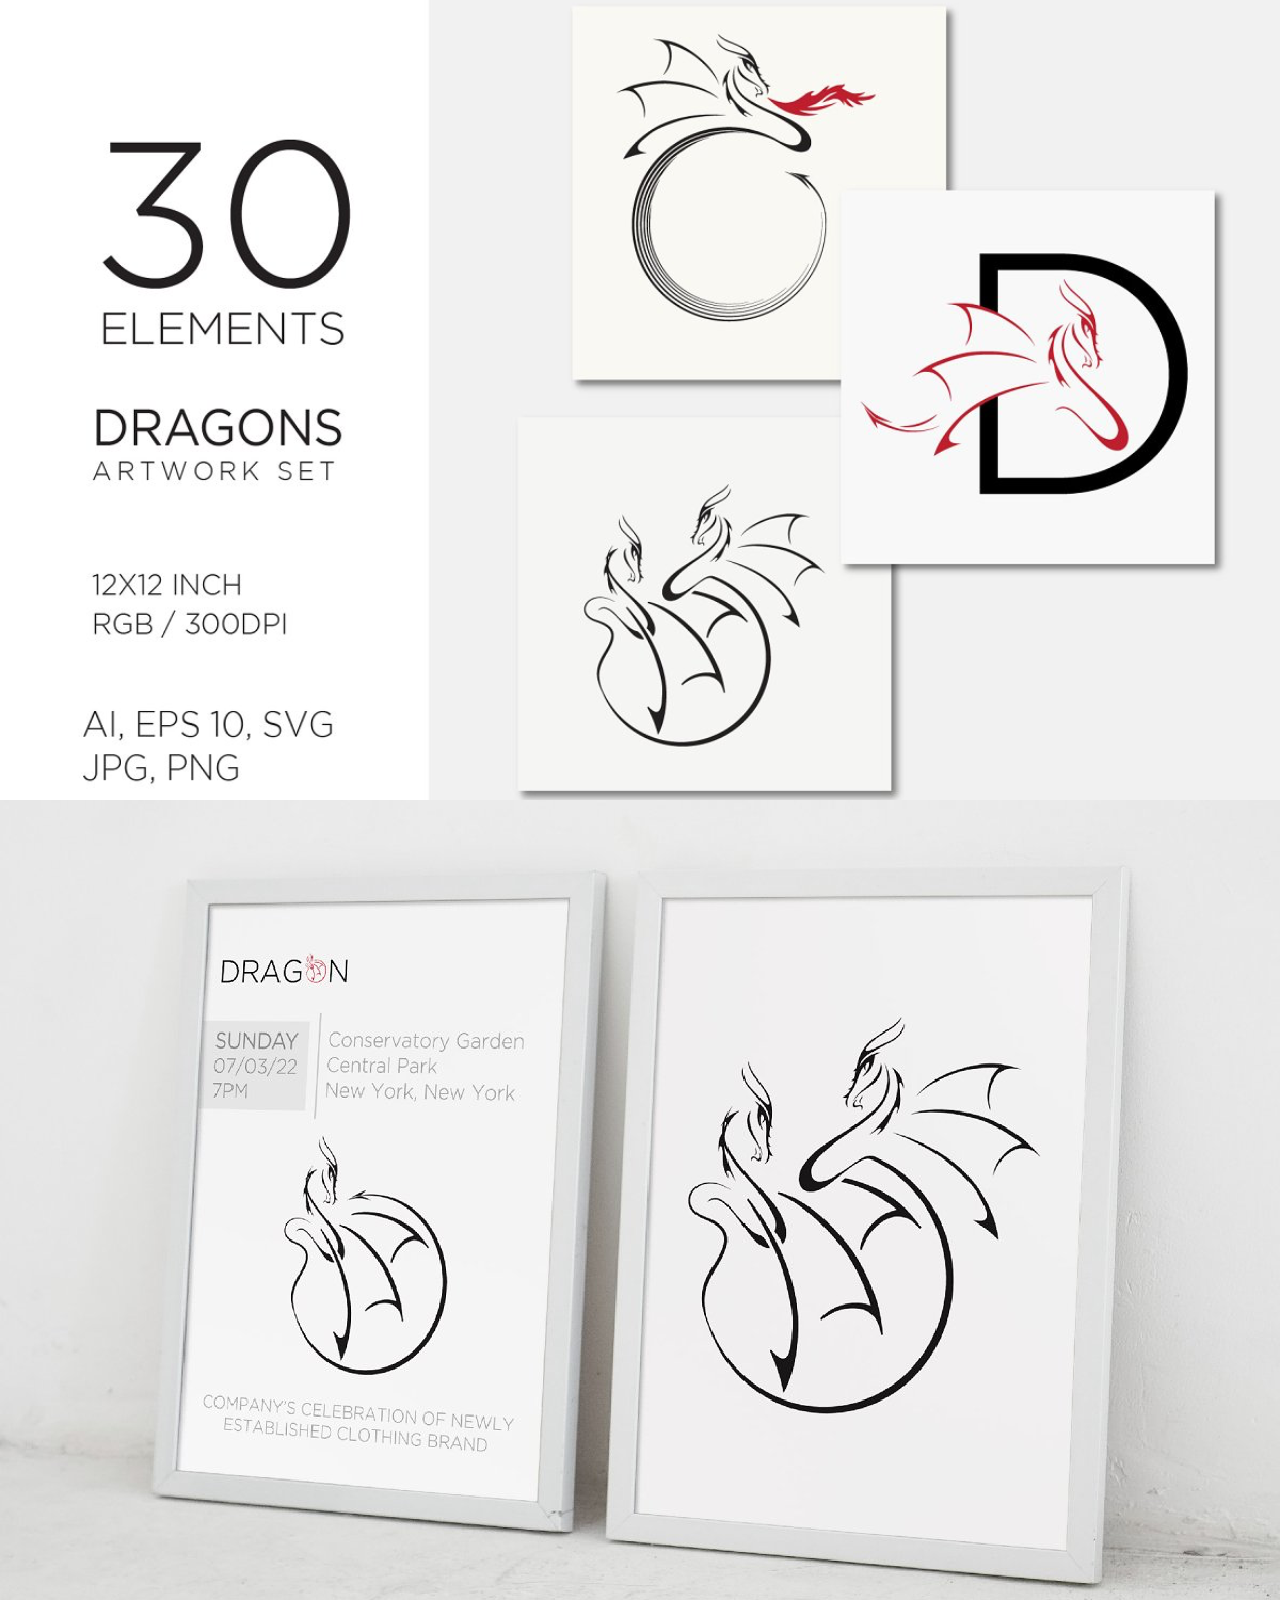 30 stylized black dragons pinterest image.